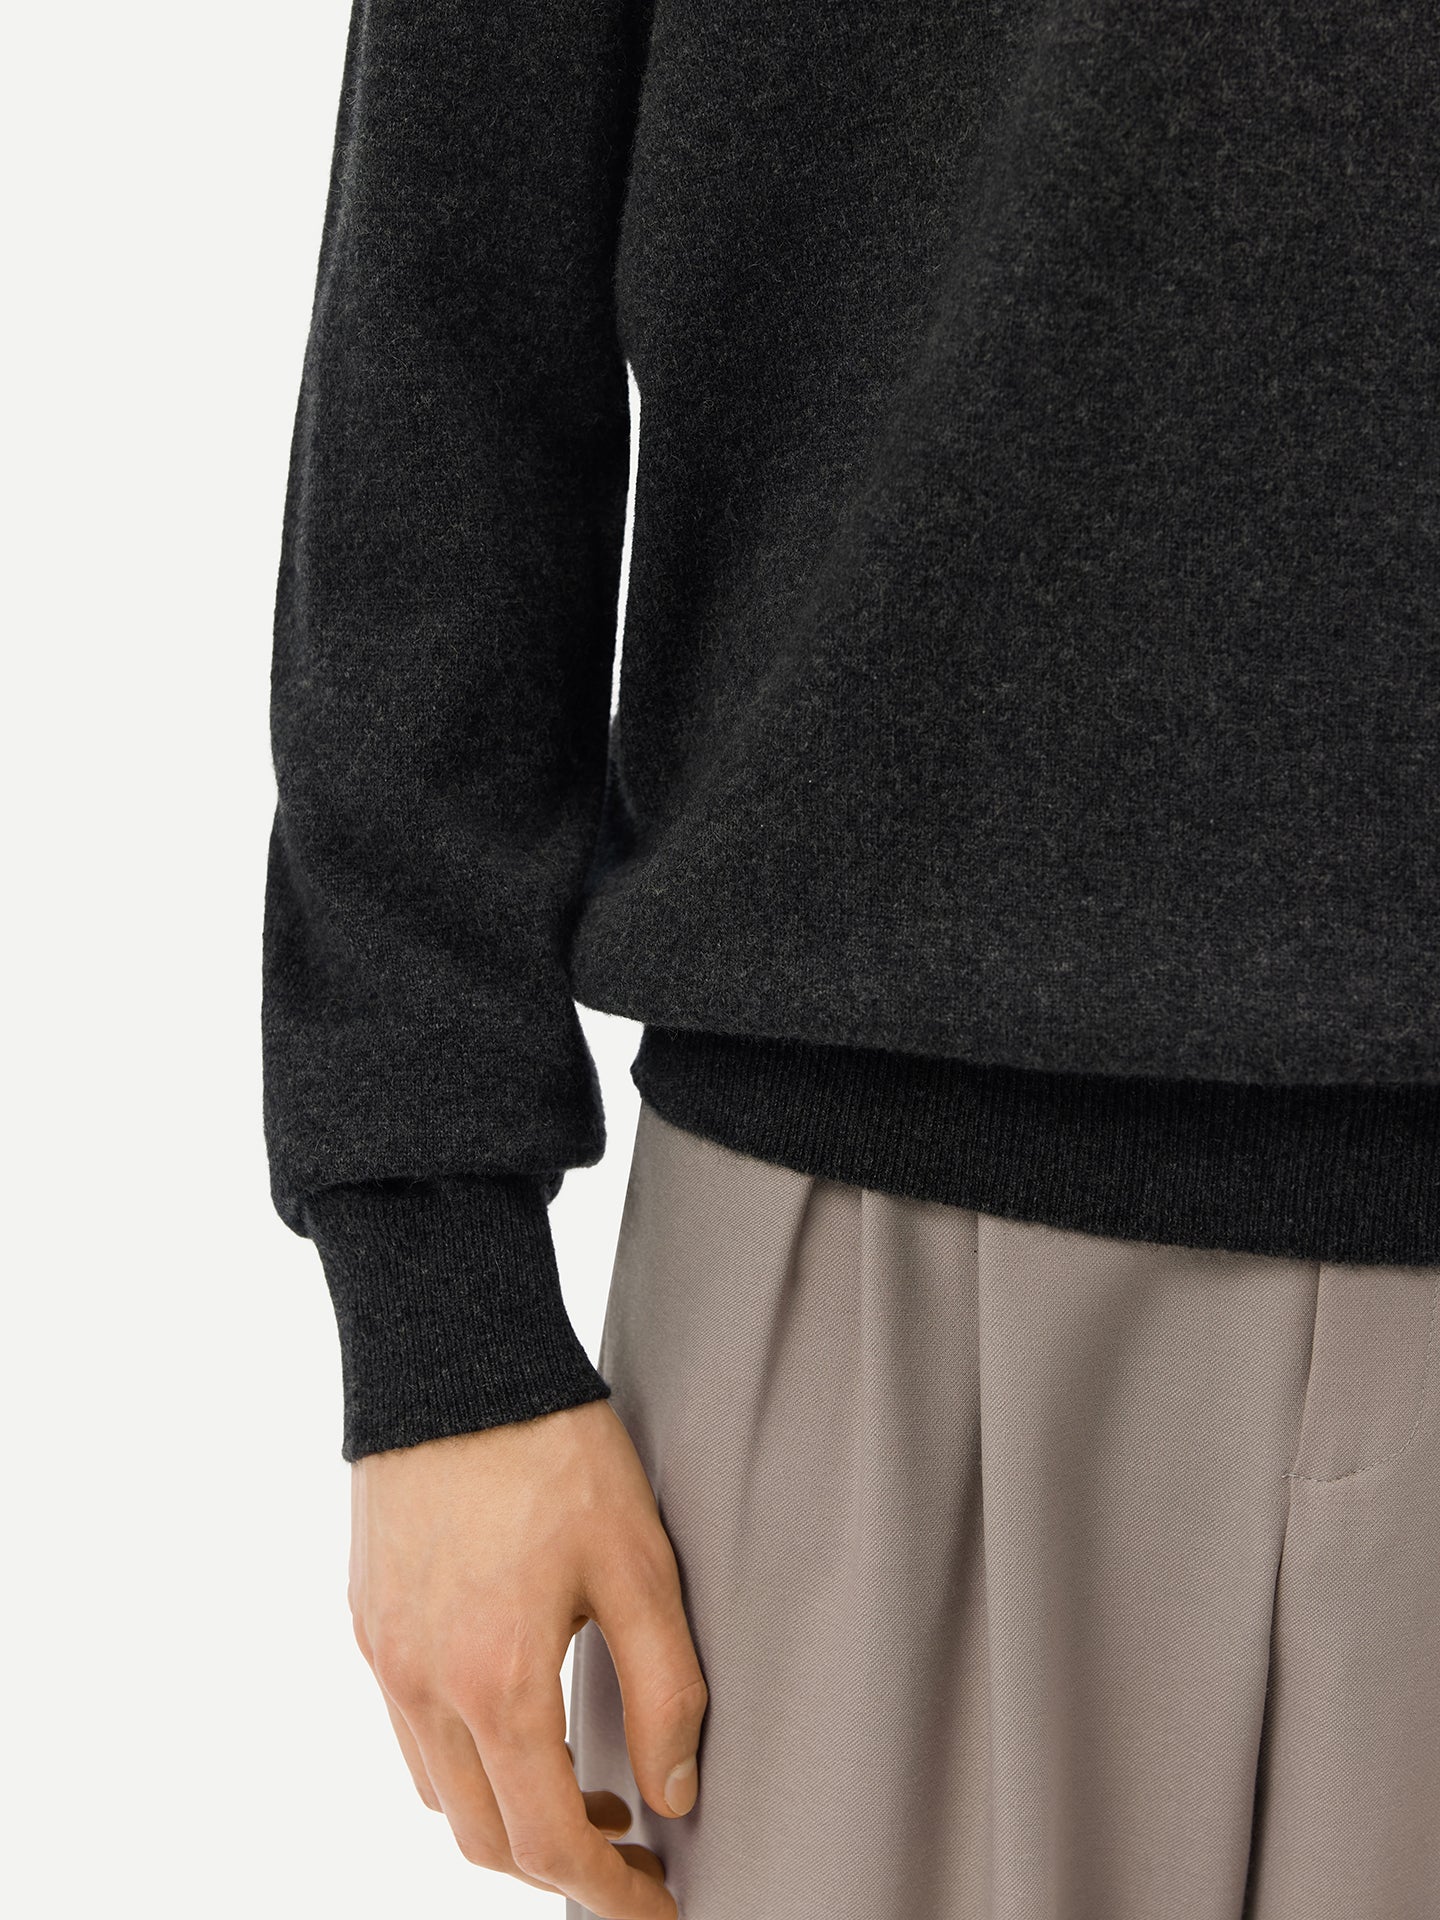 Men's Cashmere Polo Neck Sweater Charcoal - Gobi Cashmere